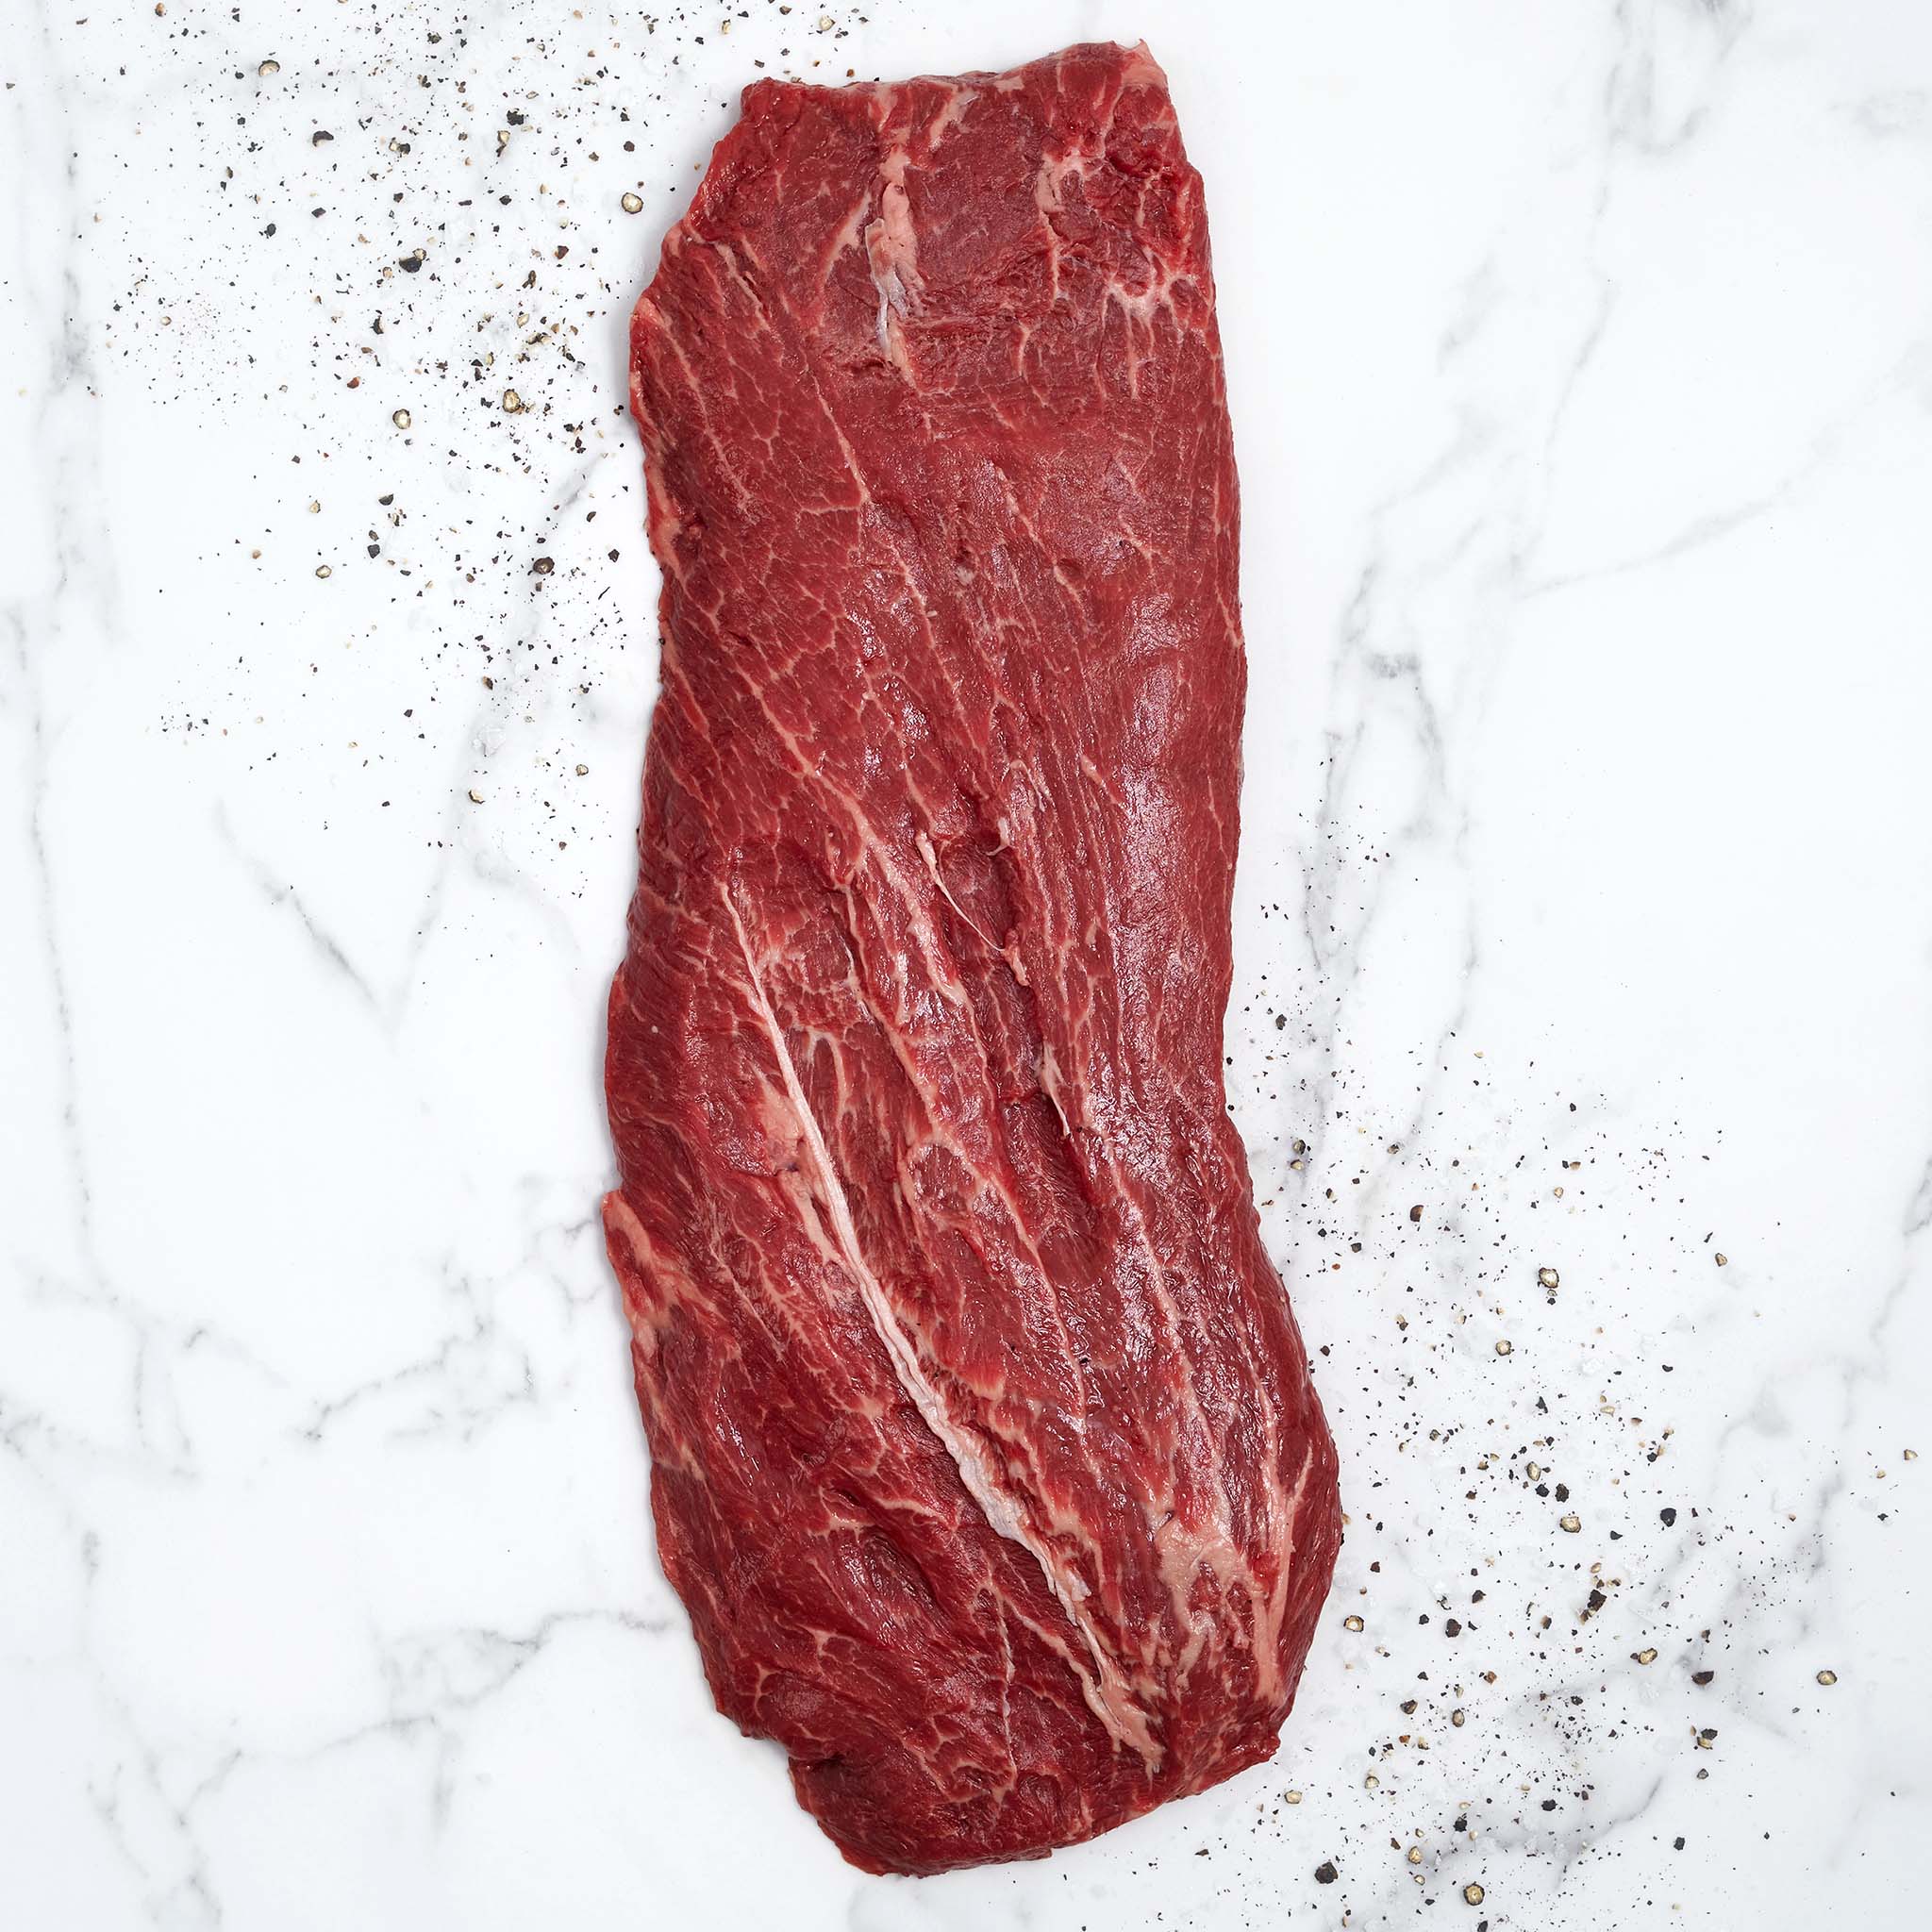 USDA Choice Black Angus Flat Iron Steak